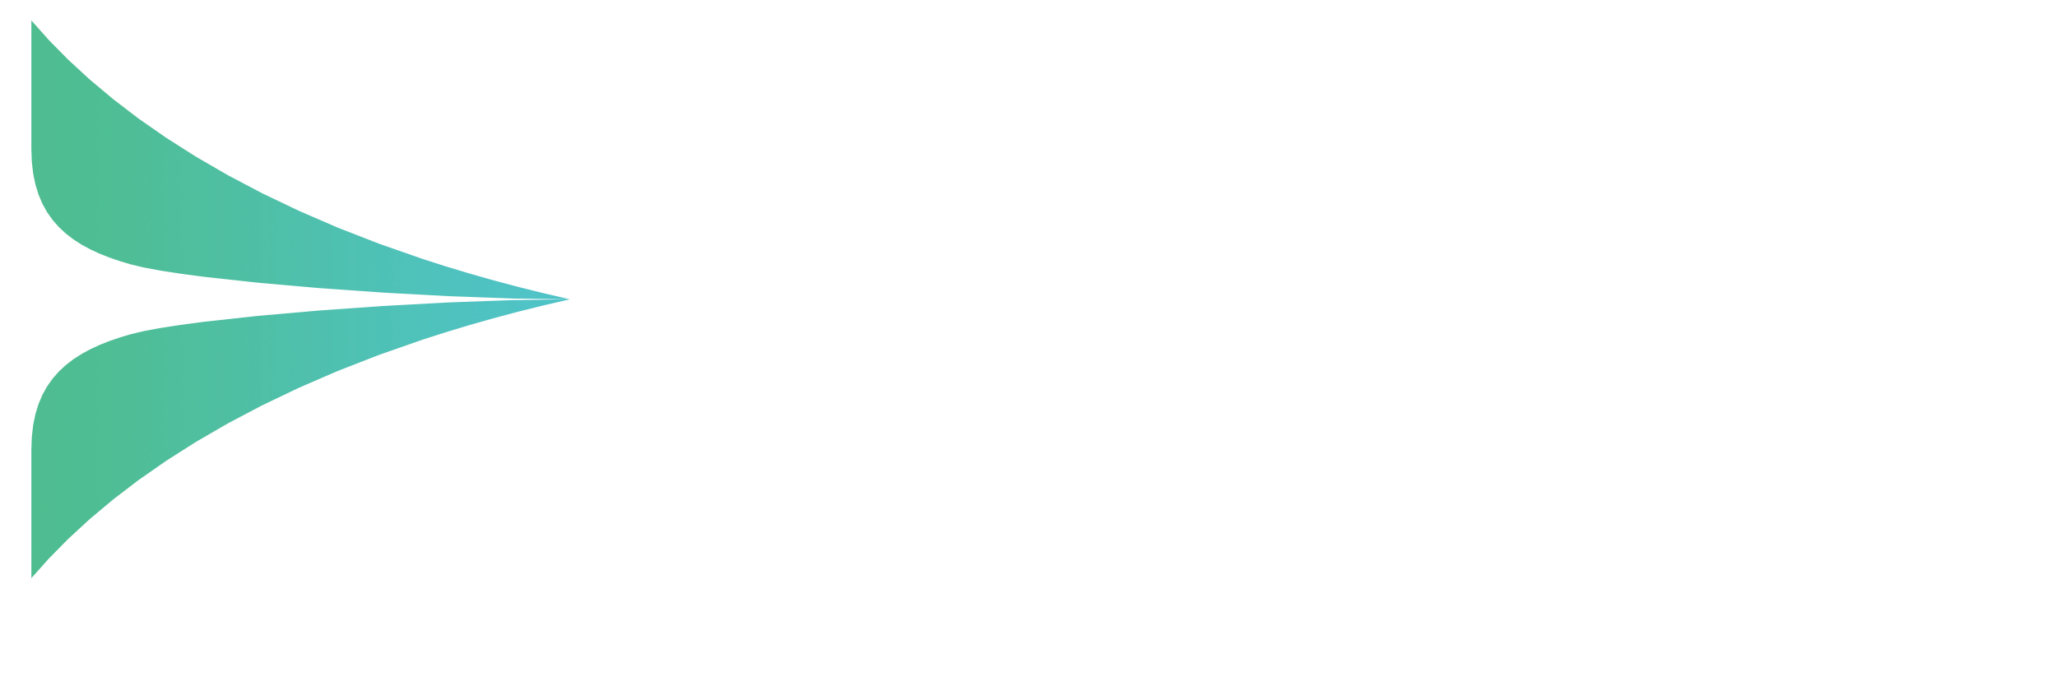 Marlin Communications